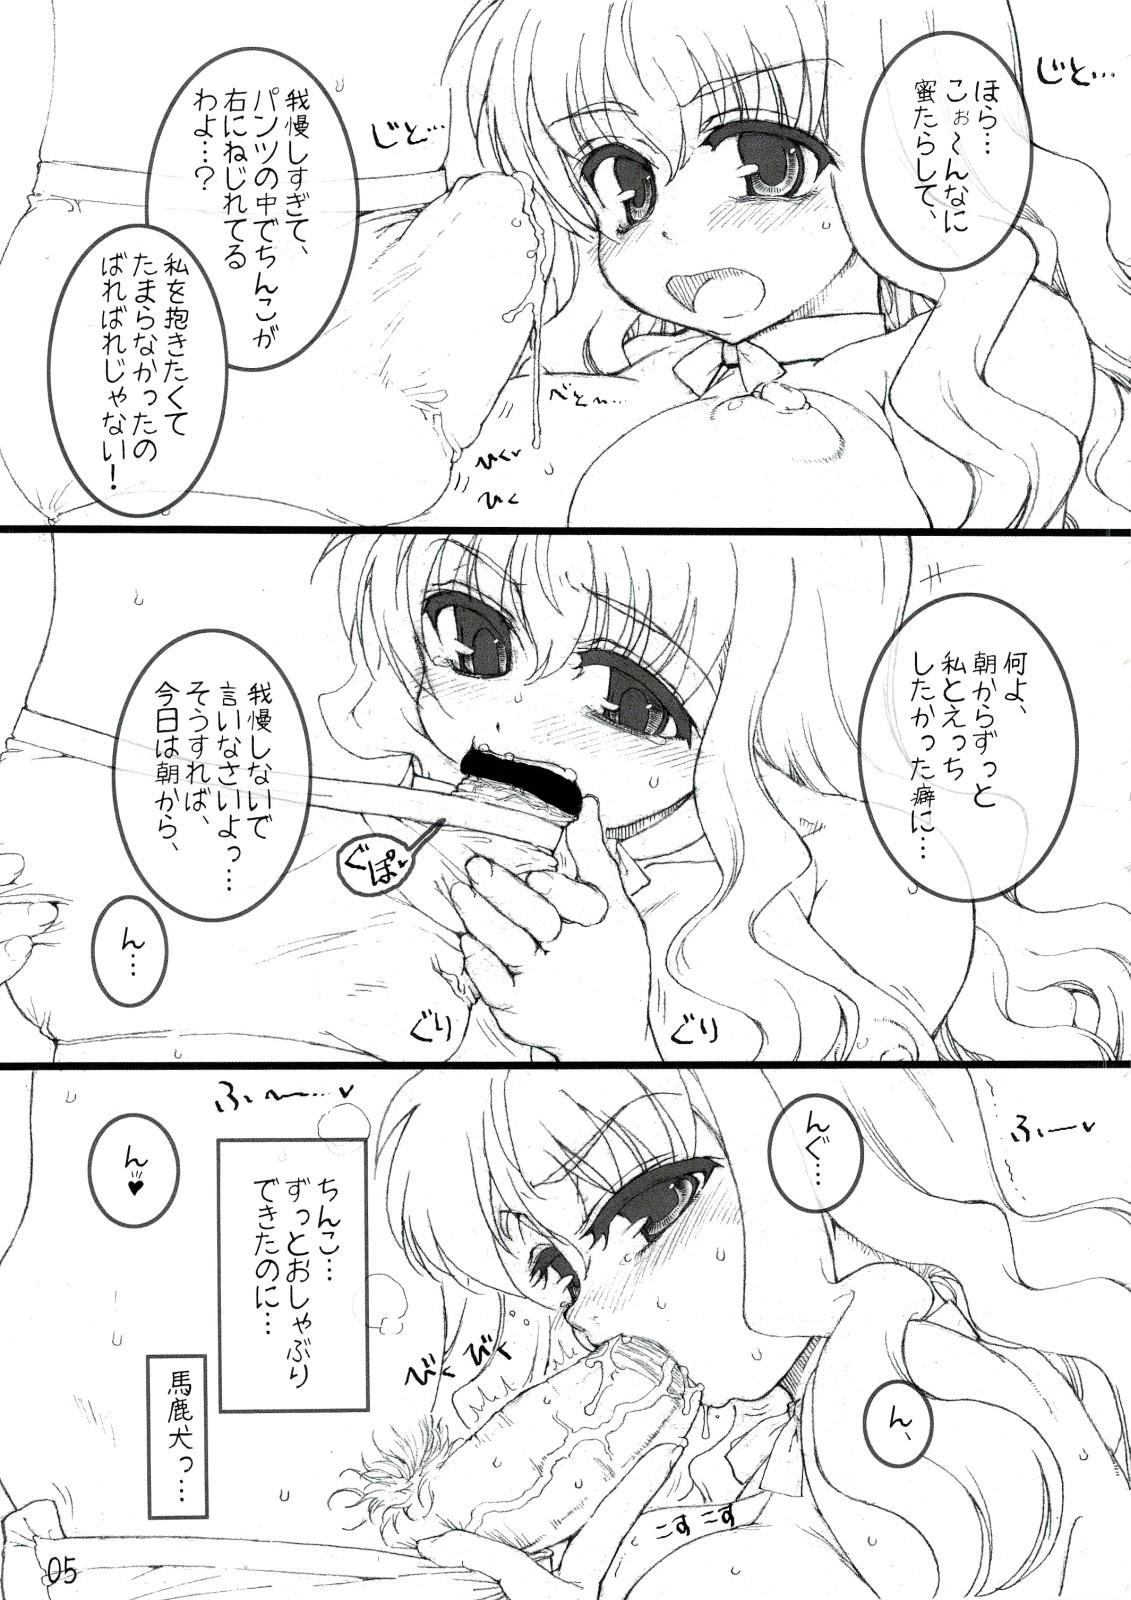 Rubbing Louise to Issho! - Zero no tsukaima Uncut - Page 4